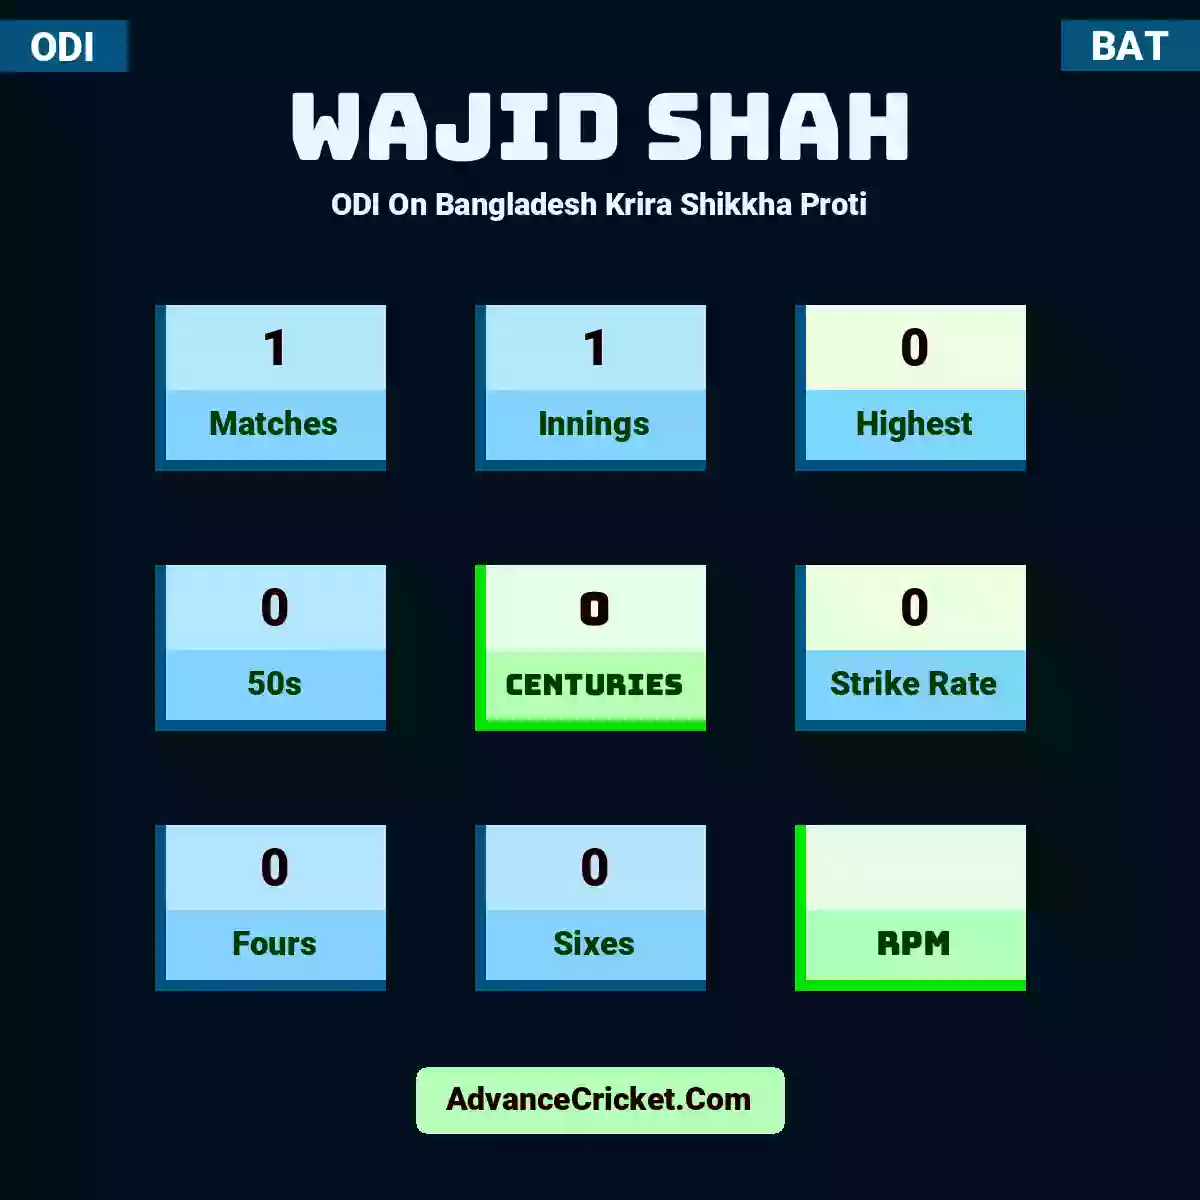 Wajid Shah ODI  On Bangladesh Krira Shikkha Proti, Wajid Shah played 1 matches, scored 0 runs as highest, 0 half-centuries, and 0 centuries, with a strike rate of 0. W.Shah hit 0 fours and 0 sixes.